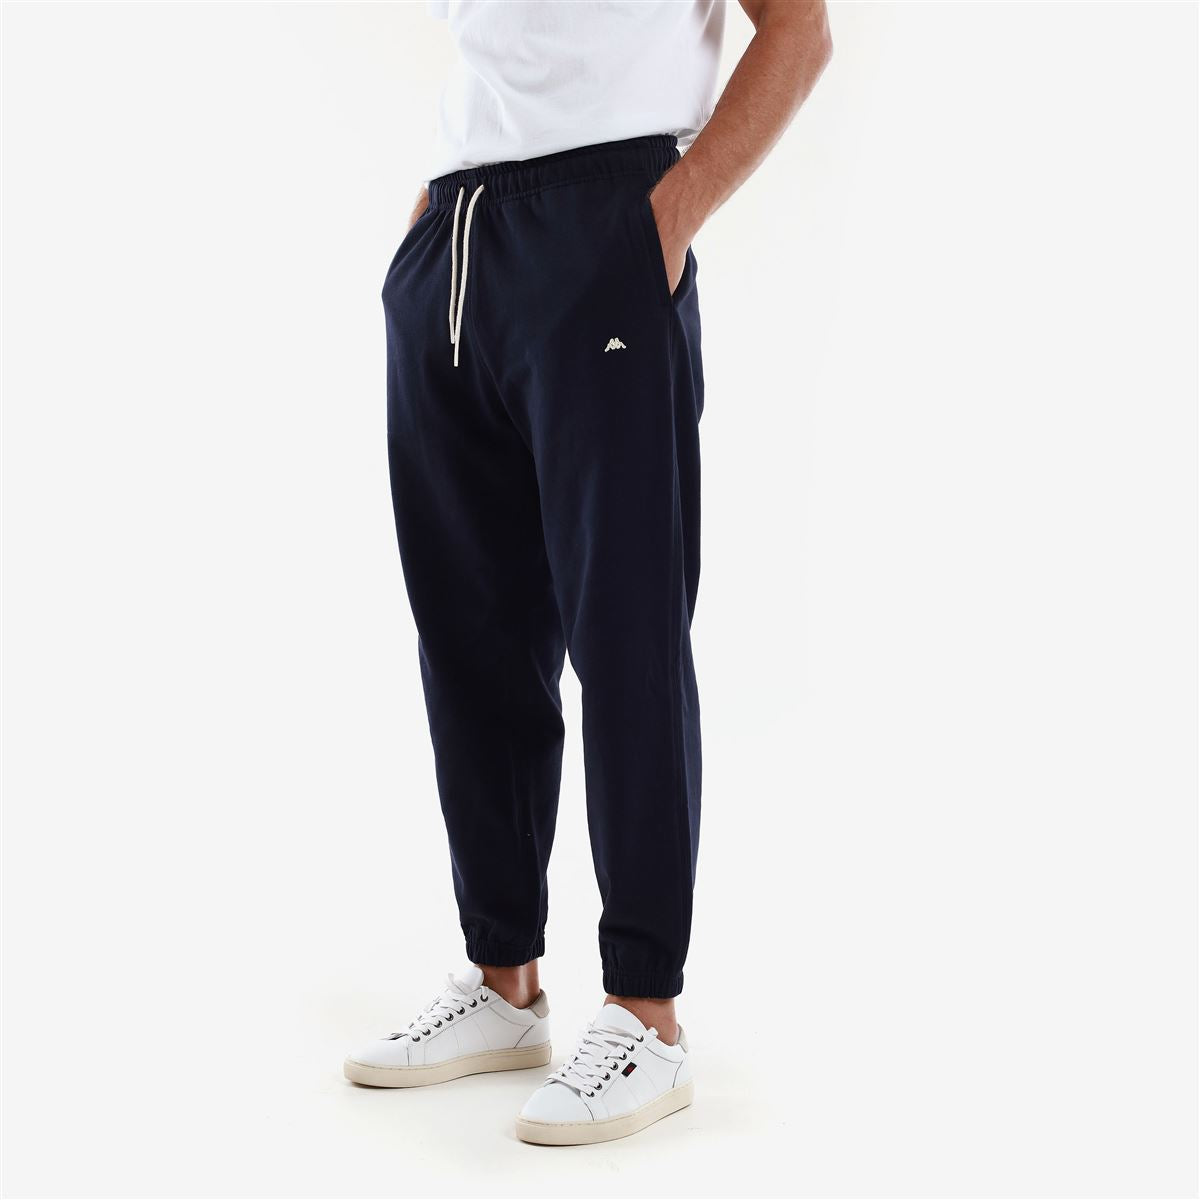 Pantalone Kappa in Tuta / Blu - Ideal Moda